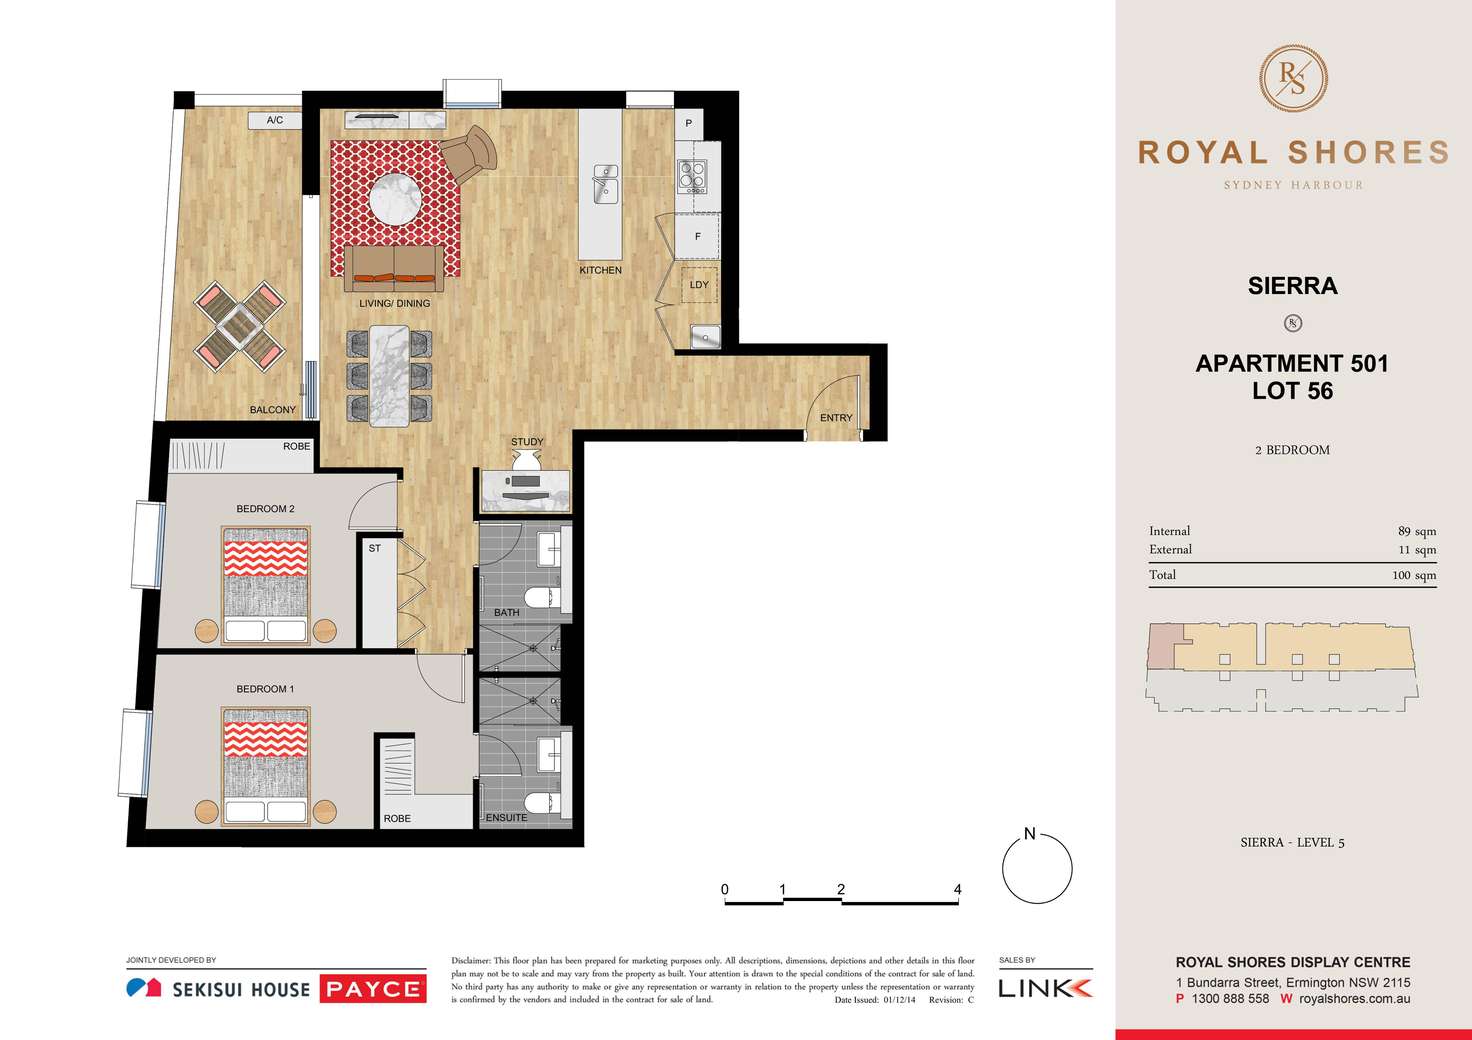 Floorplan of Homely apartment listing, 501/1 Allambie Street, Ermington NSW 2115